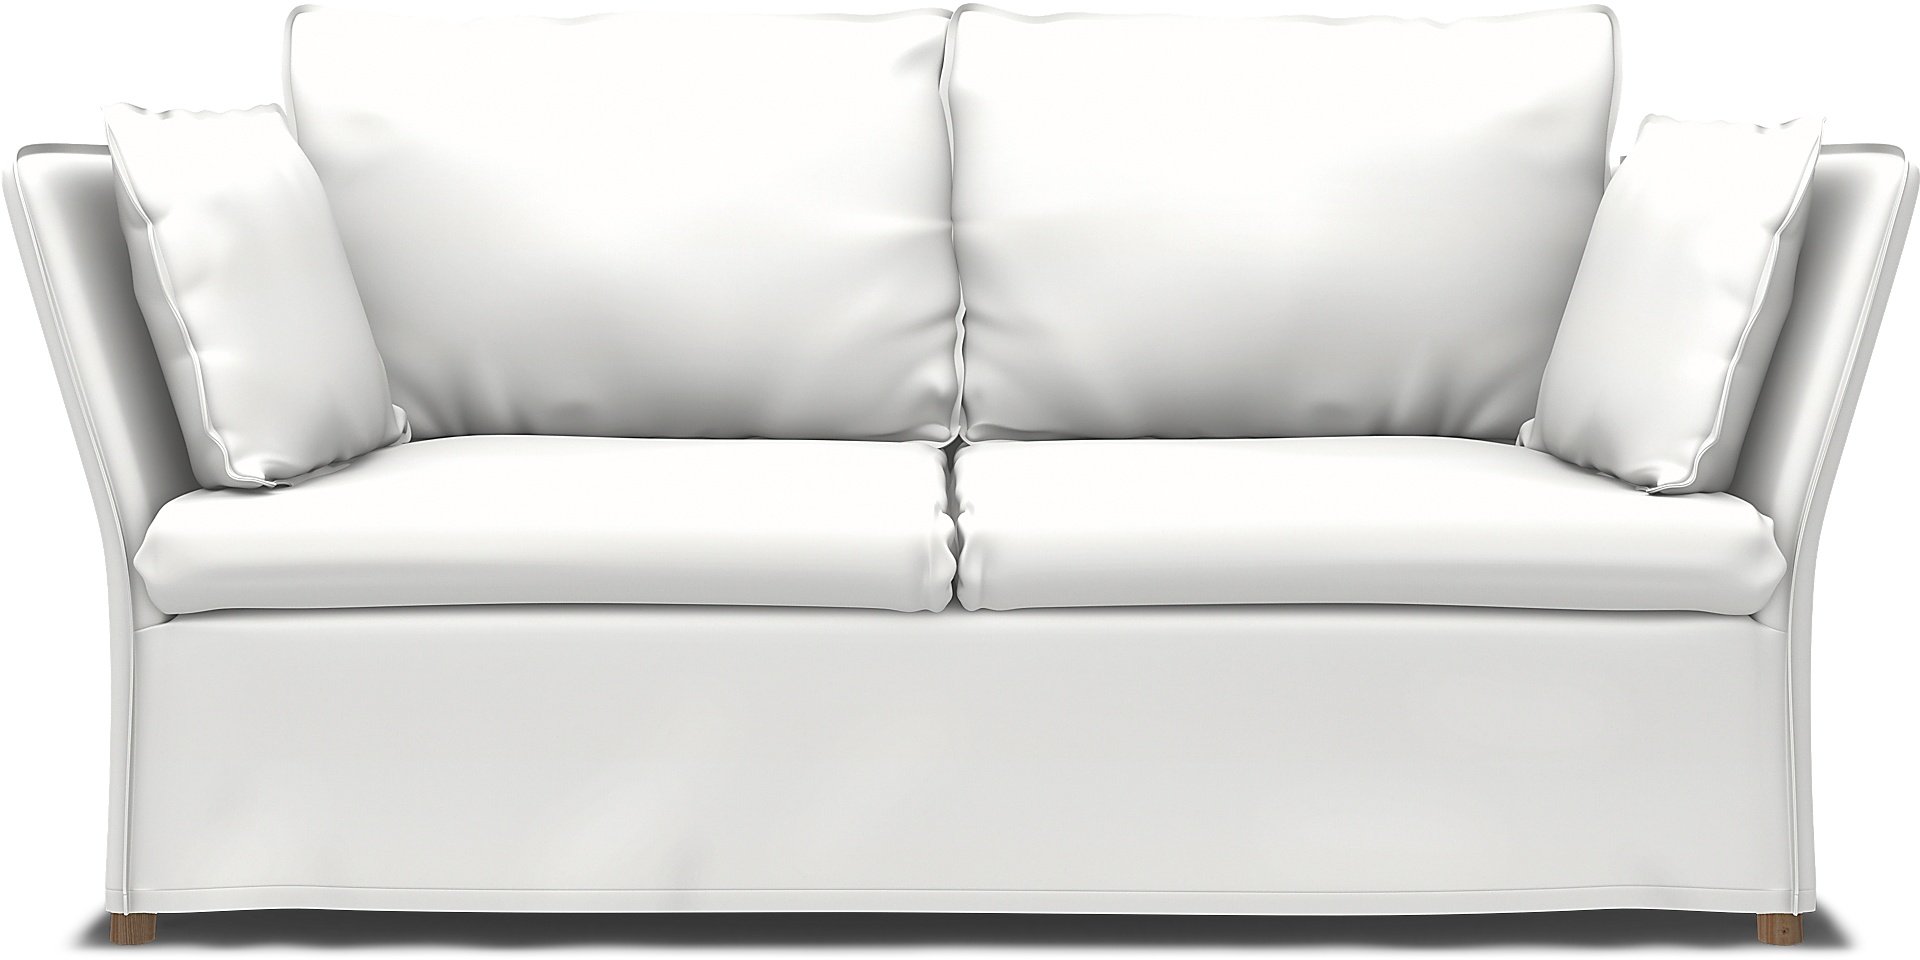 IKEA - Backsalen 2 seater sofa, Absolute White, Linen - Bemz